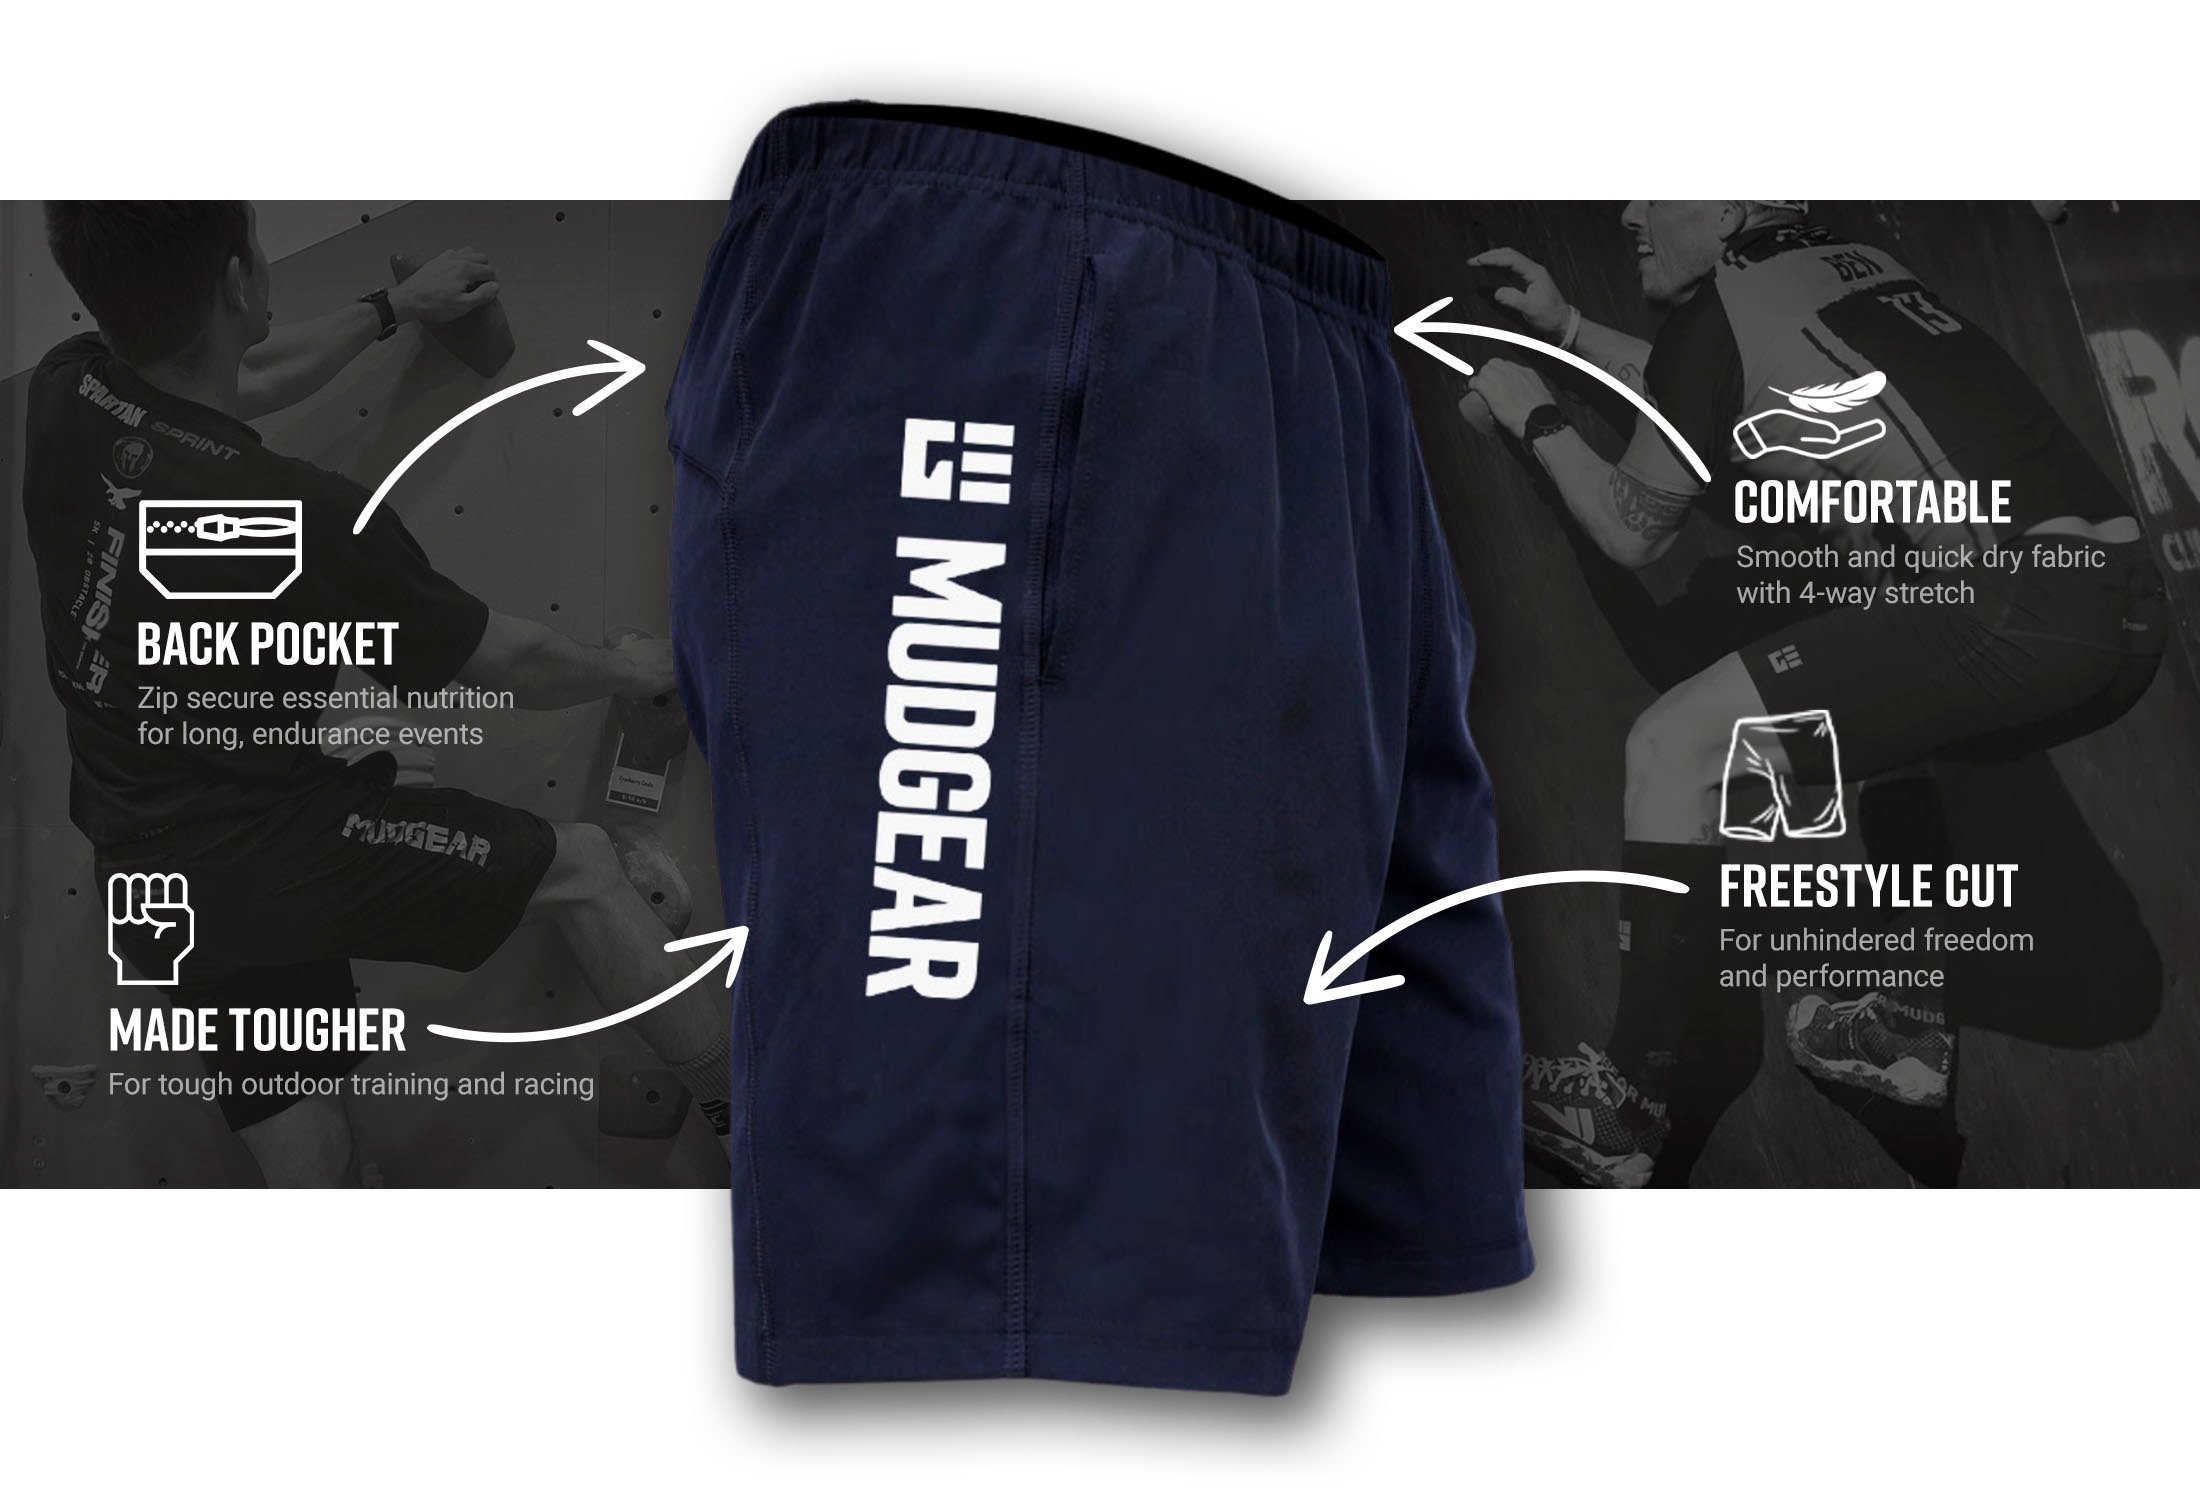 Reebok Men's Active Underwear - Performance Boxer Briefs (4 Pack),  Black/Blue/Black/Blue, Large price in Saudi Arabia,  Saudi Arabia